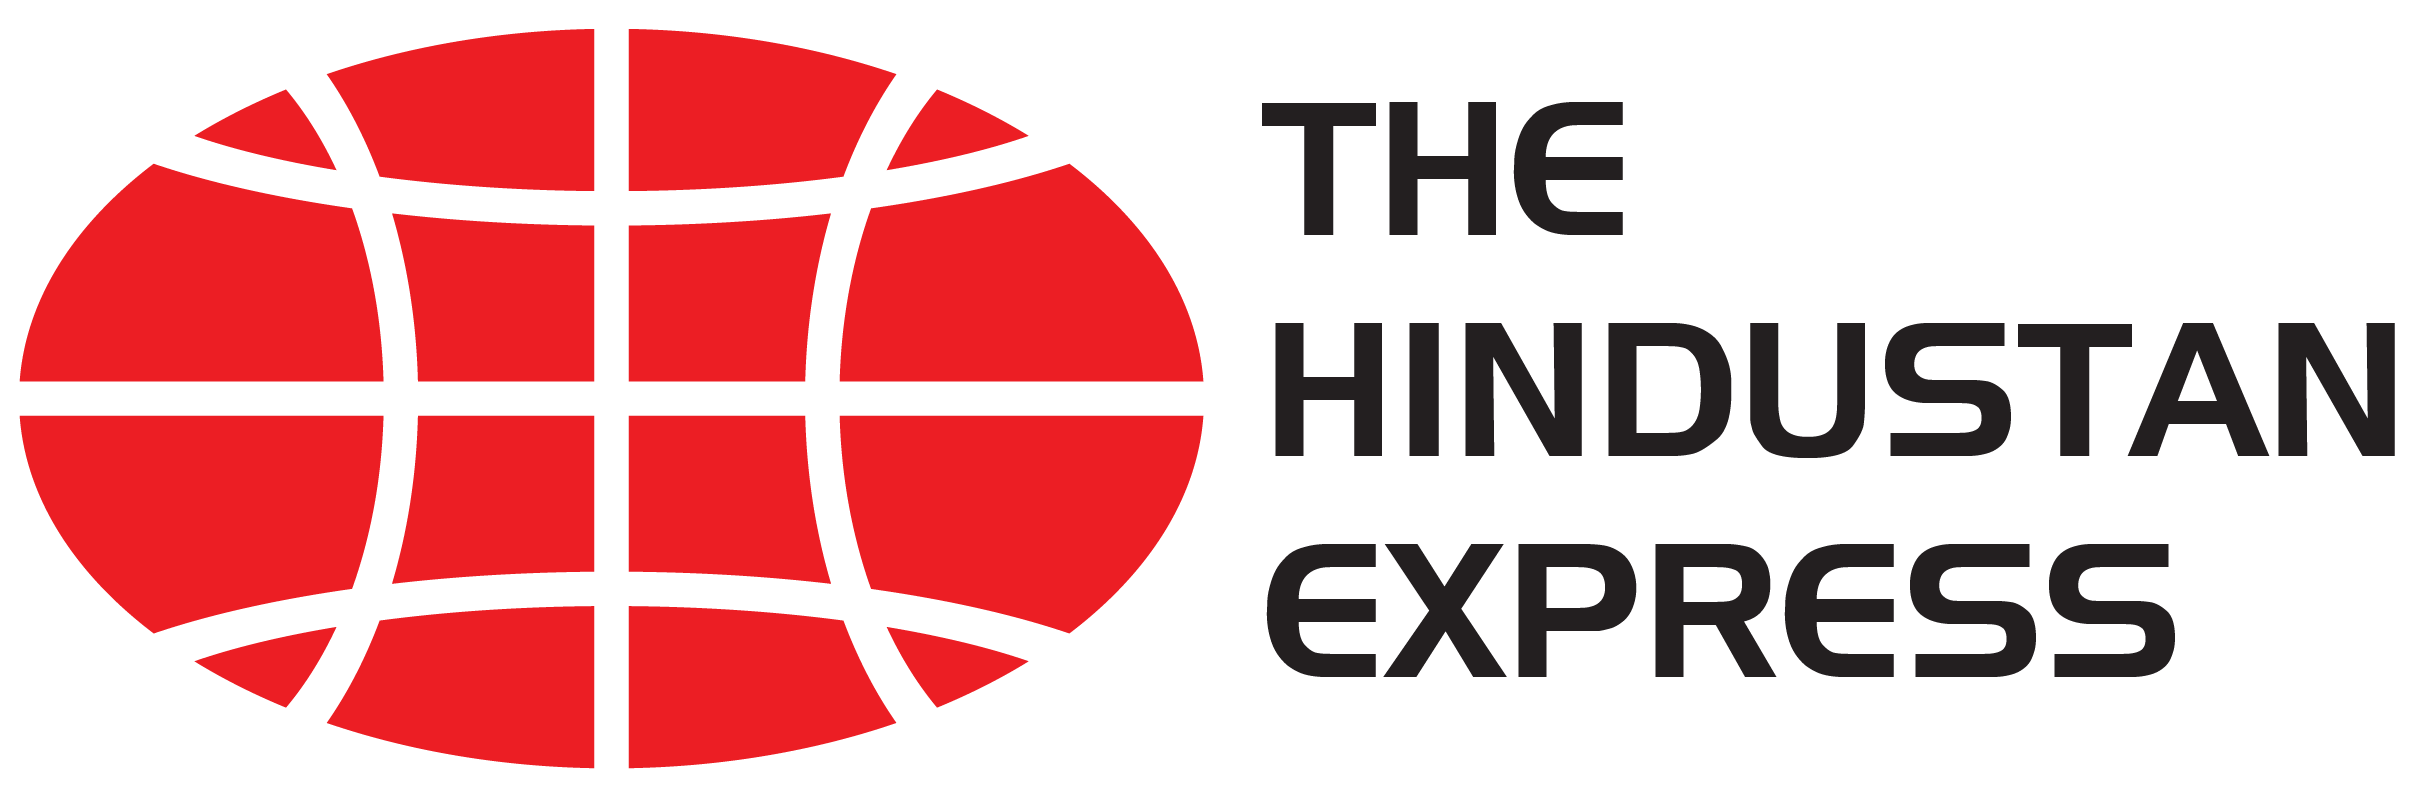 The Hindustan Express